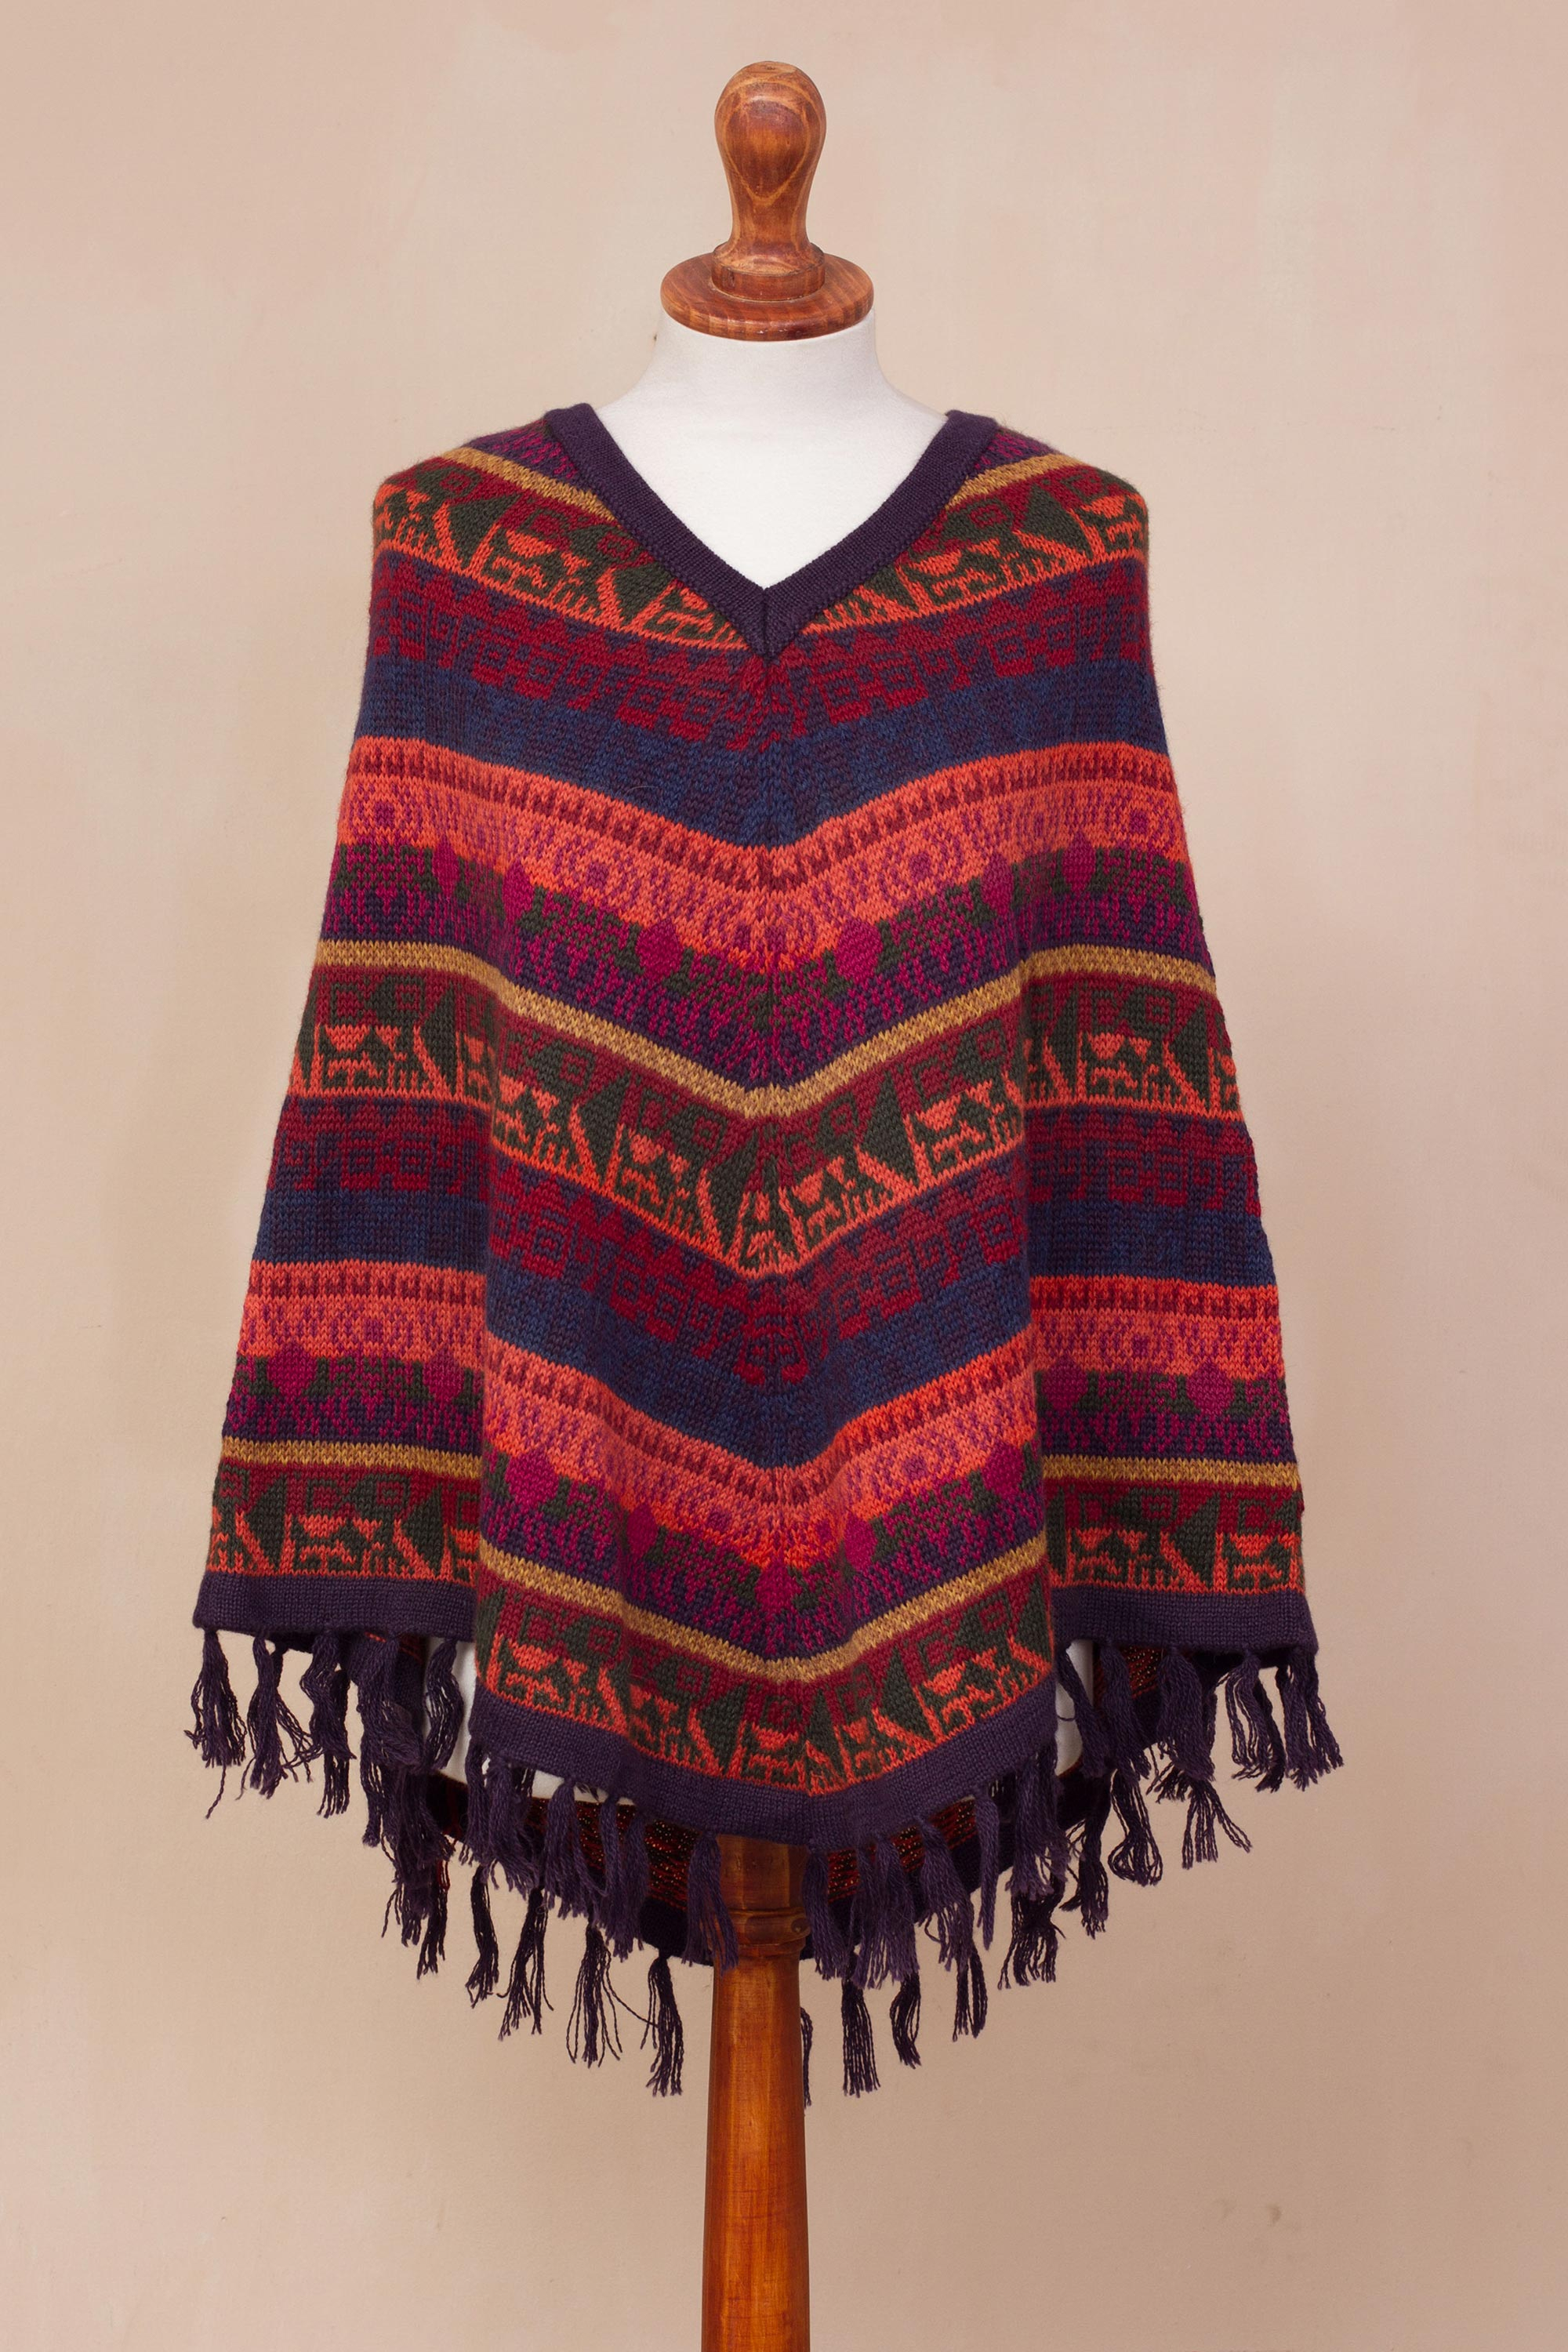 Knit V-Neck Alpaca Wool Blend Poncho from Peru - Inca Gala | NOVICA